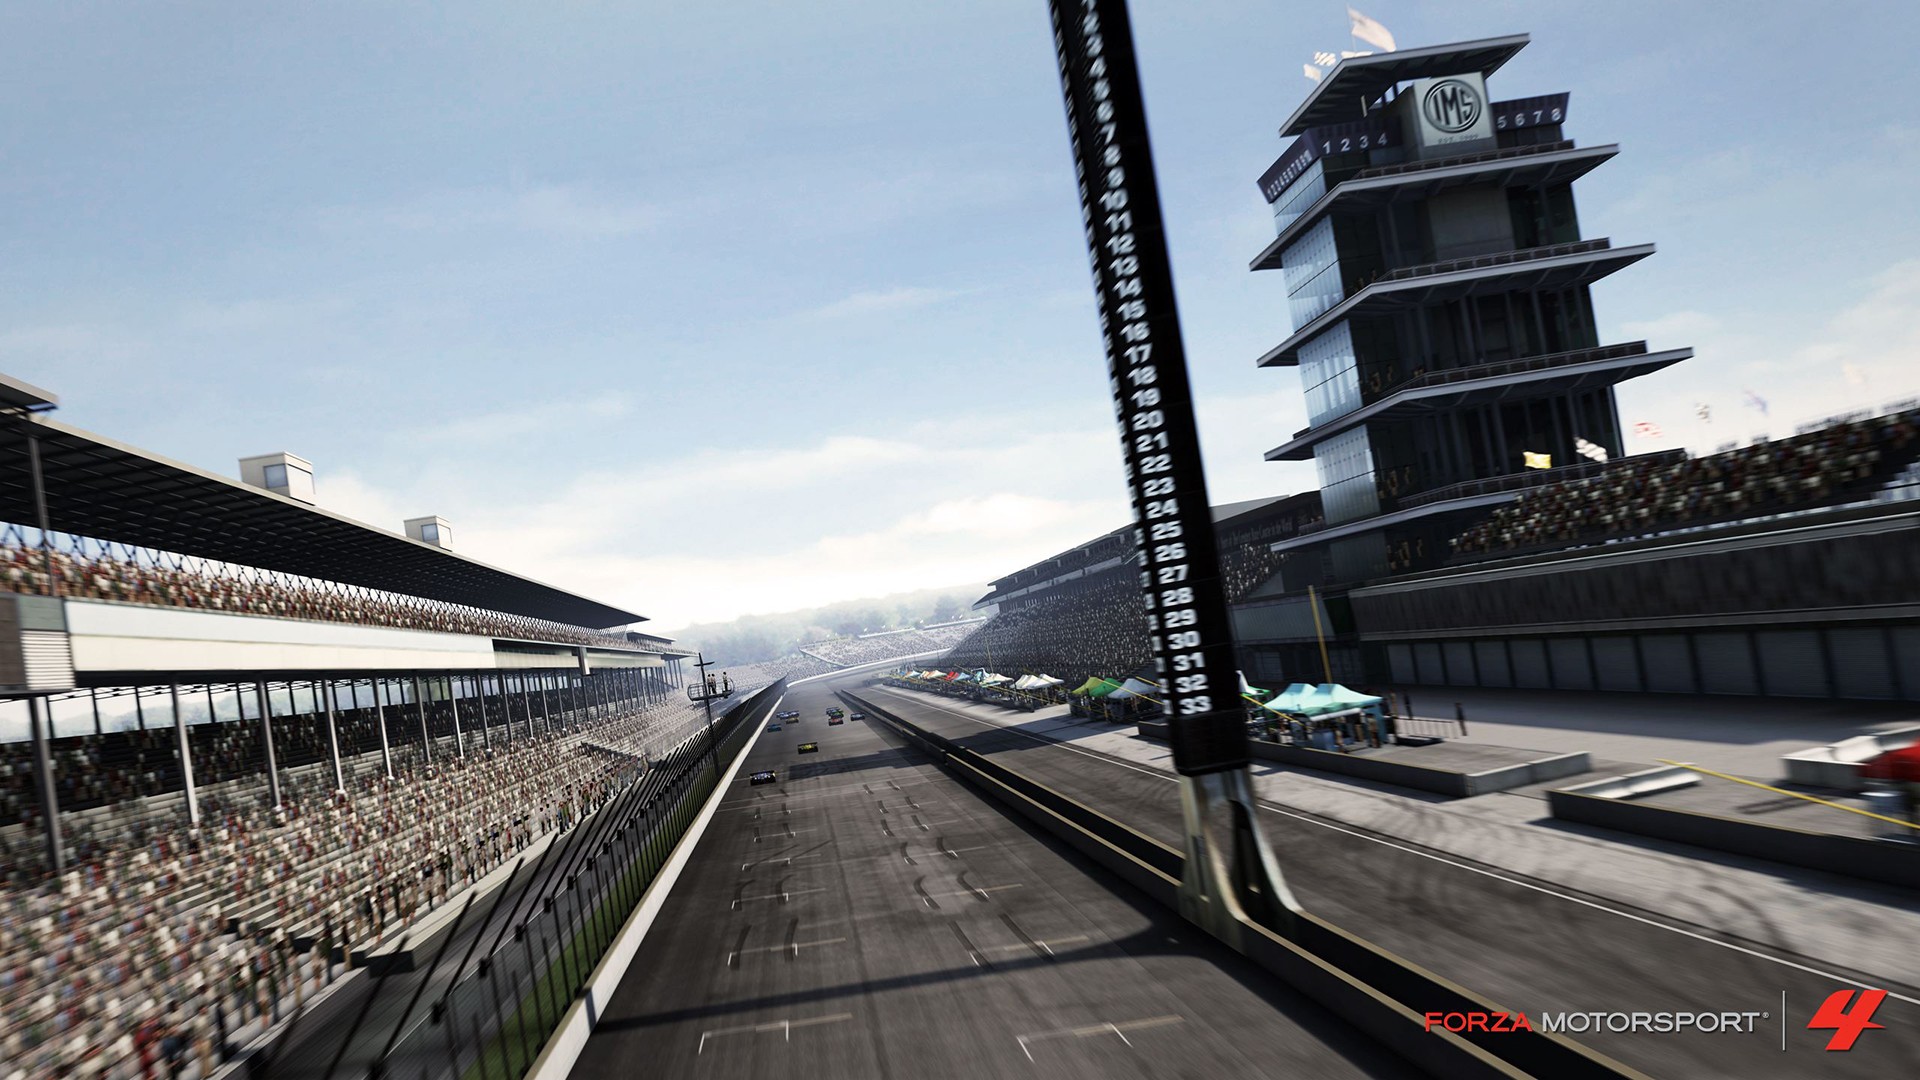 Baixar papel de parede para celular de Forza Motorsport, Videogame gratuito.